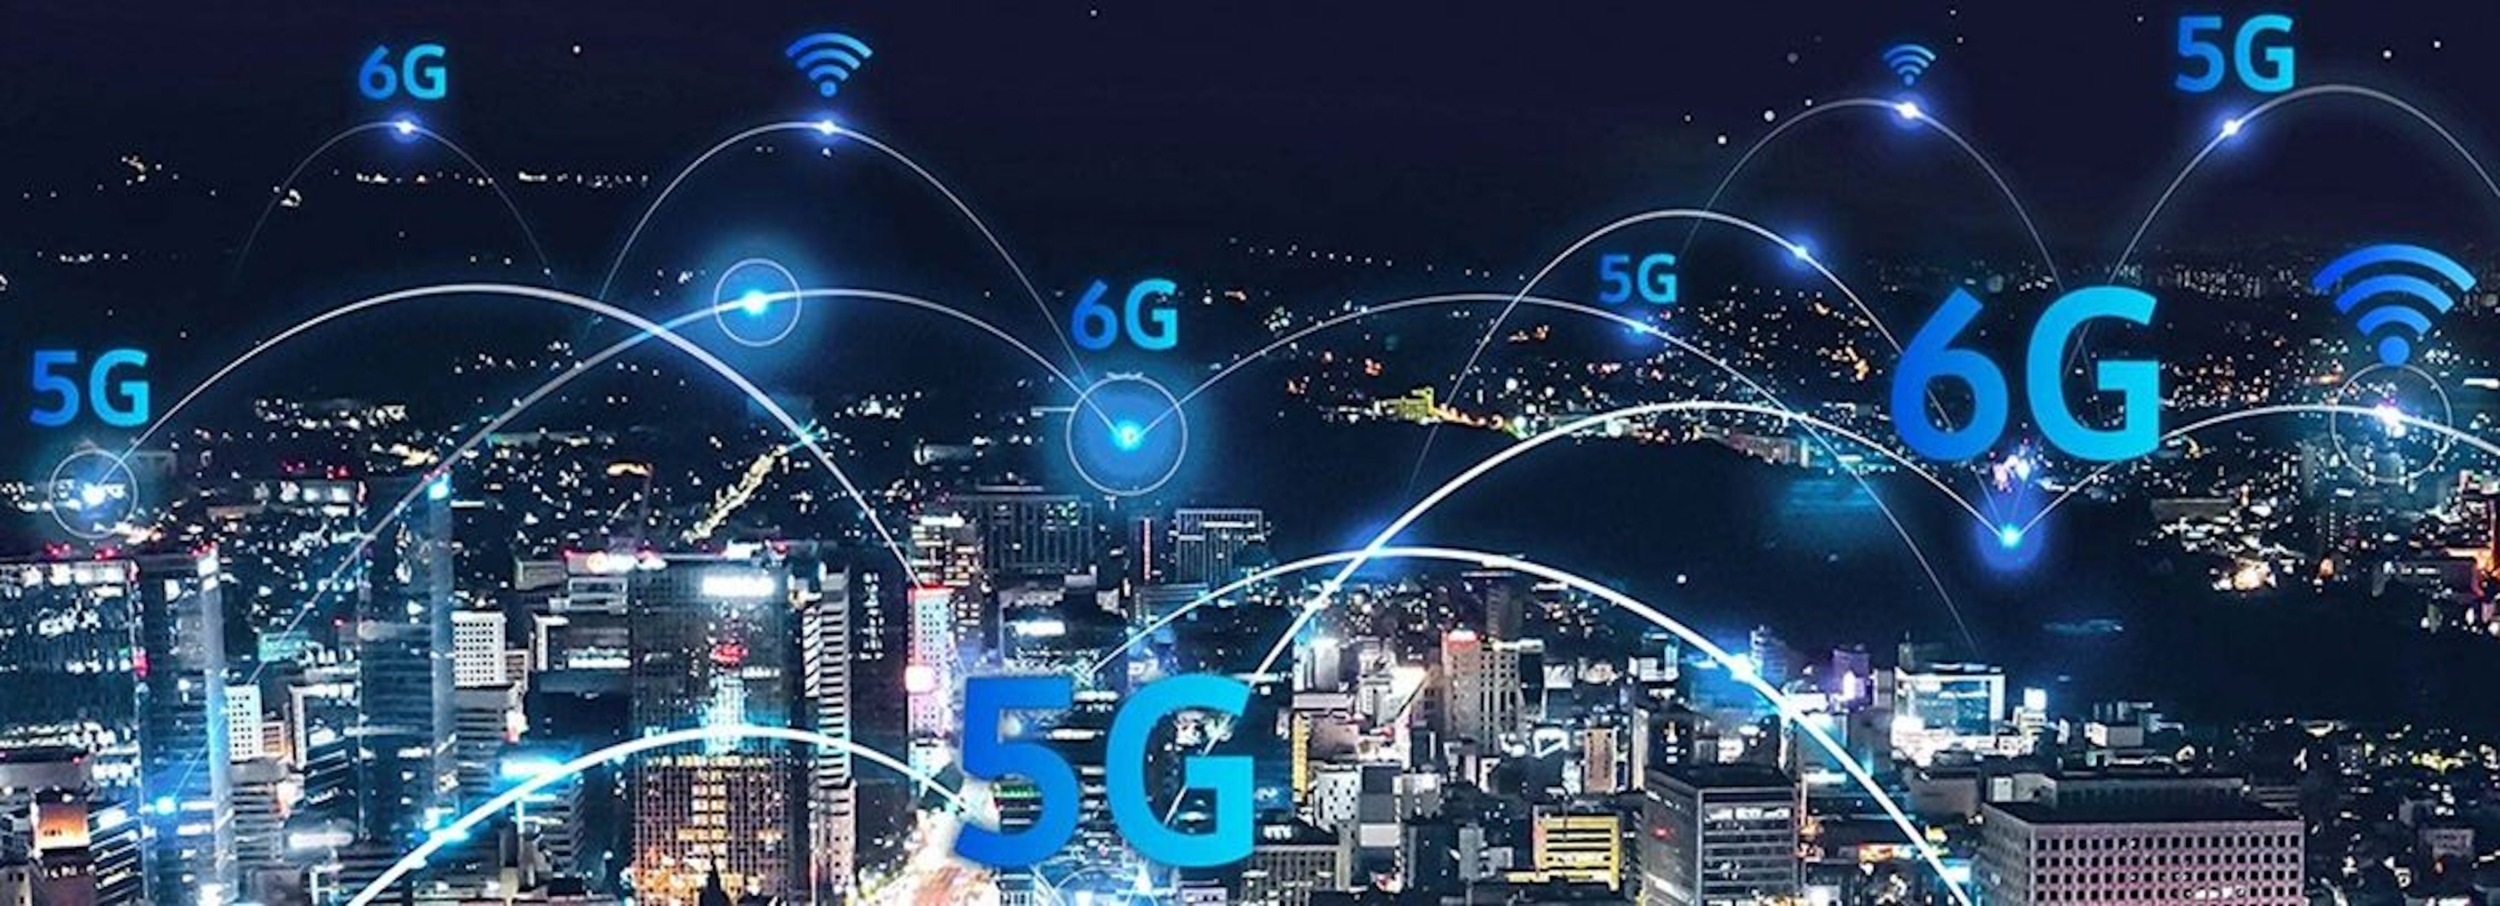 LG v Korei demonstruje technologii 6G